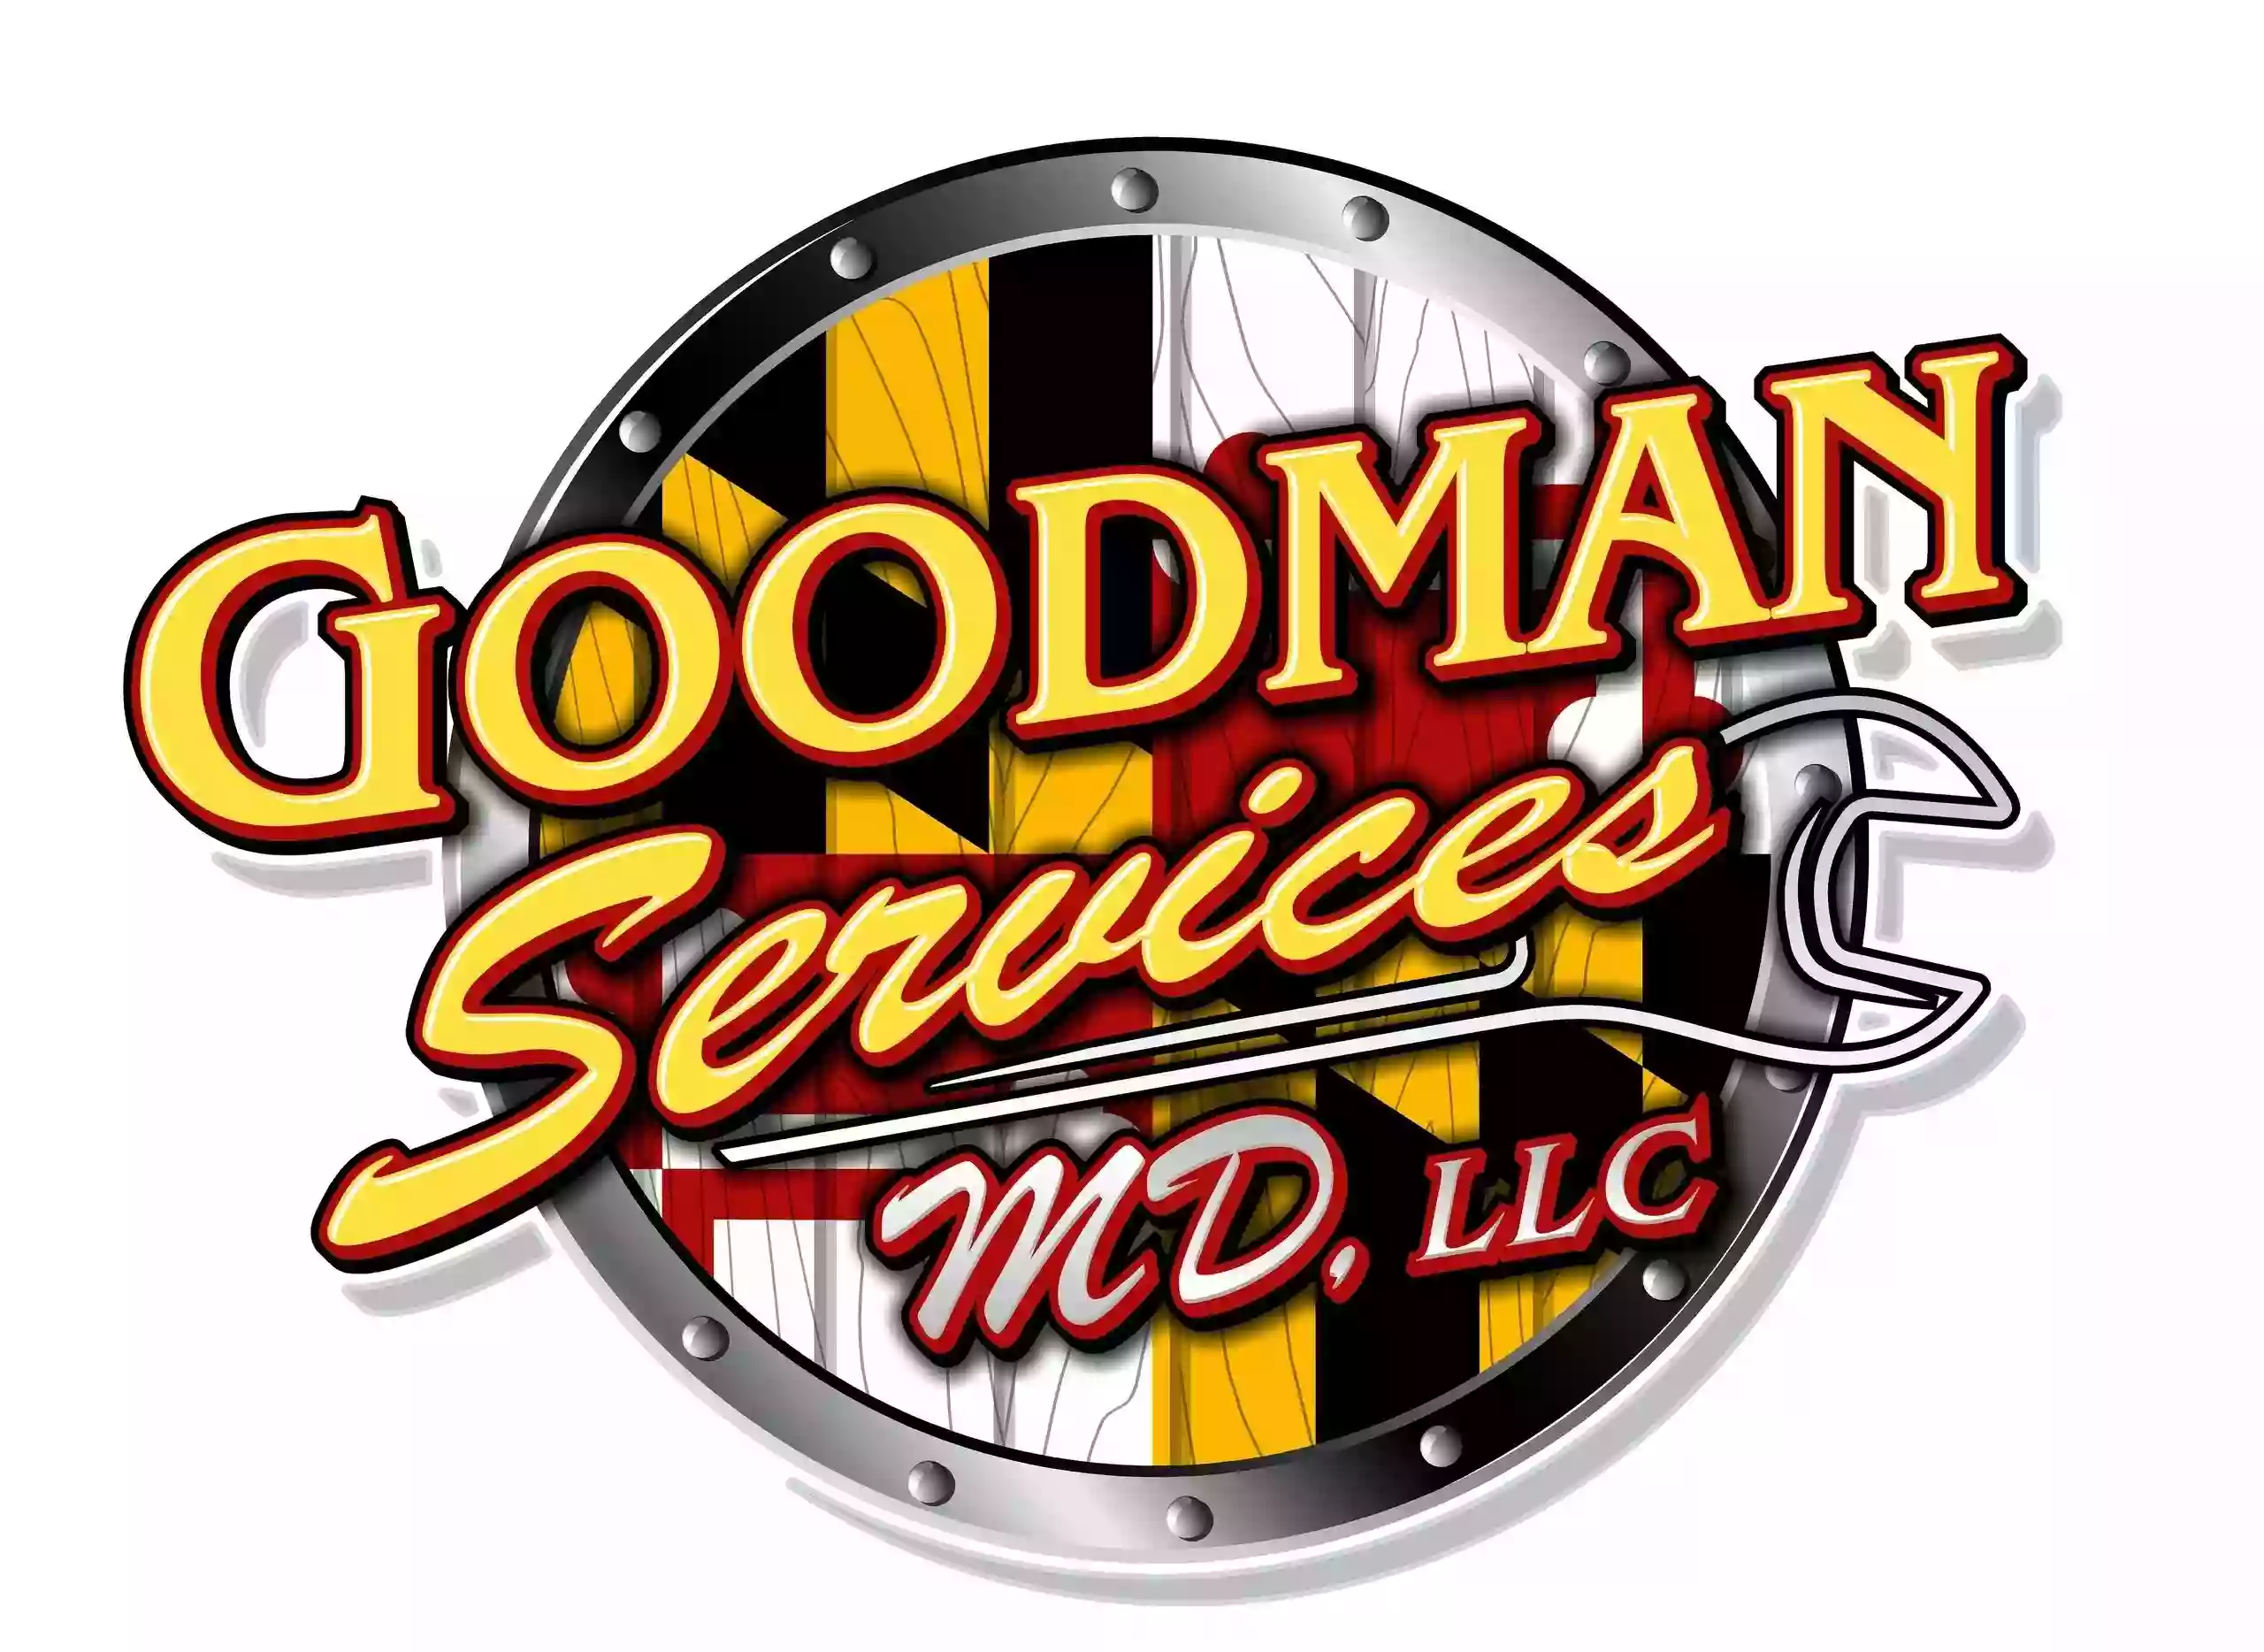 Goodman services MD, LLC